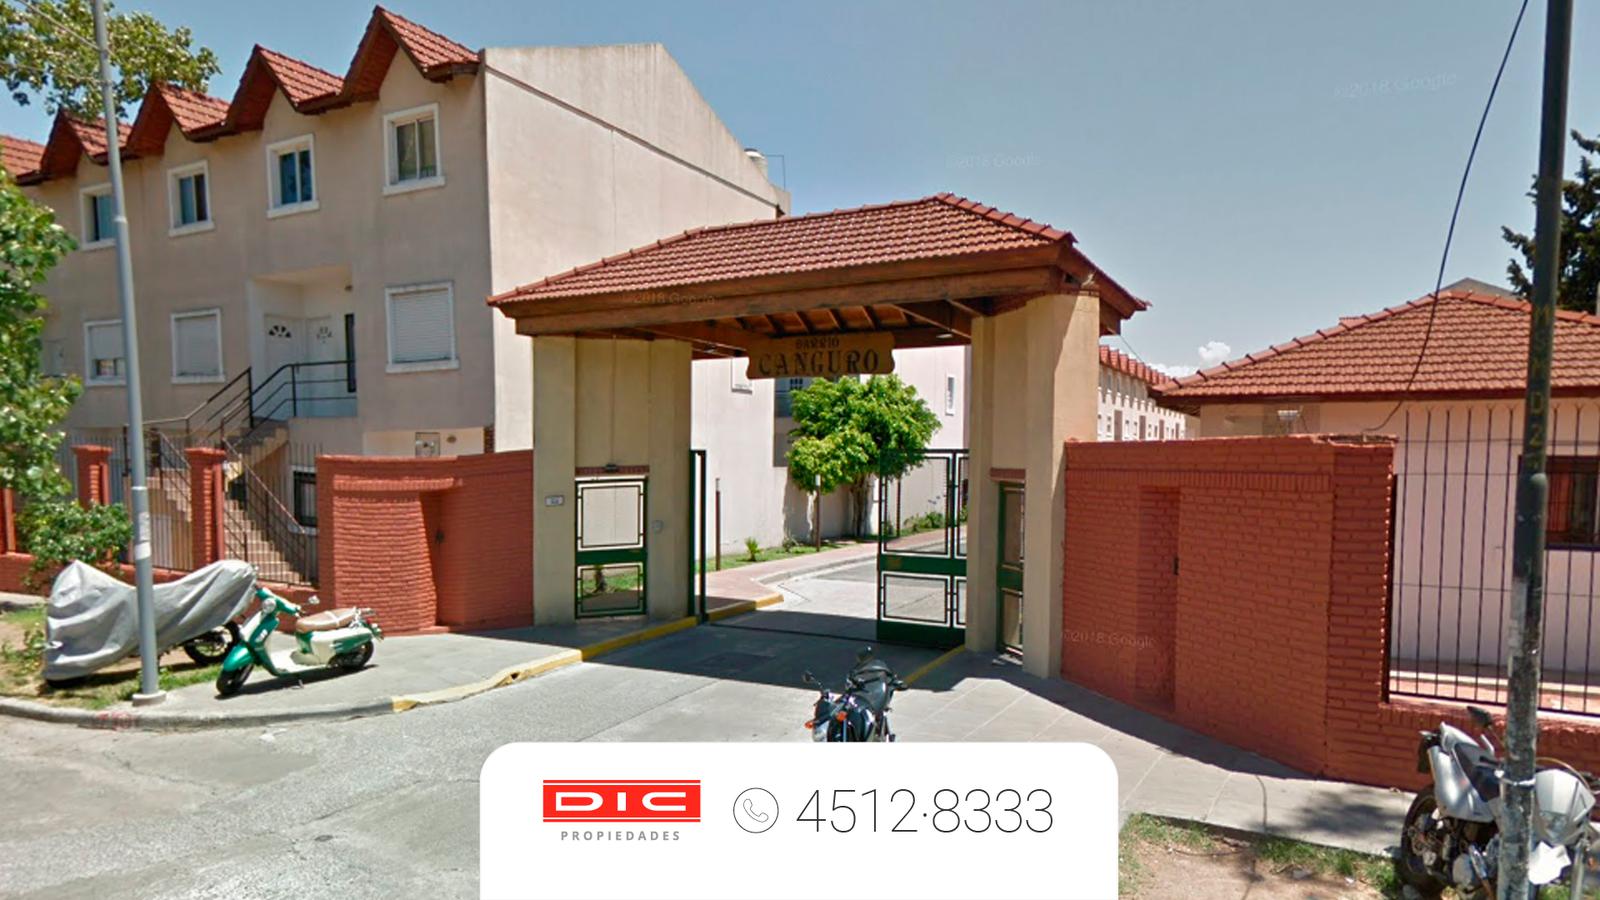 #5129915 | Rental | Apartment | San Andres (Dic Propiedades)